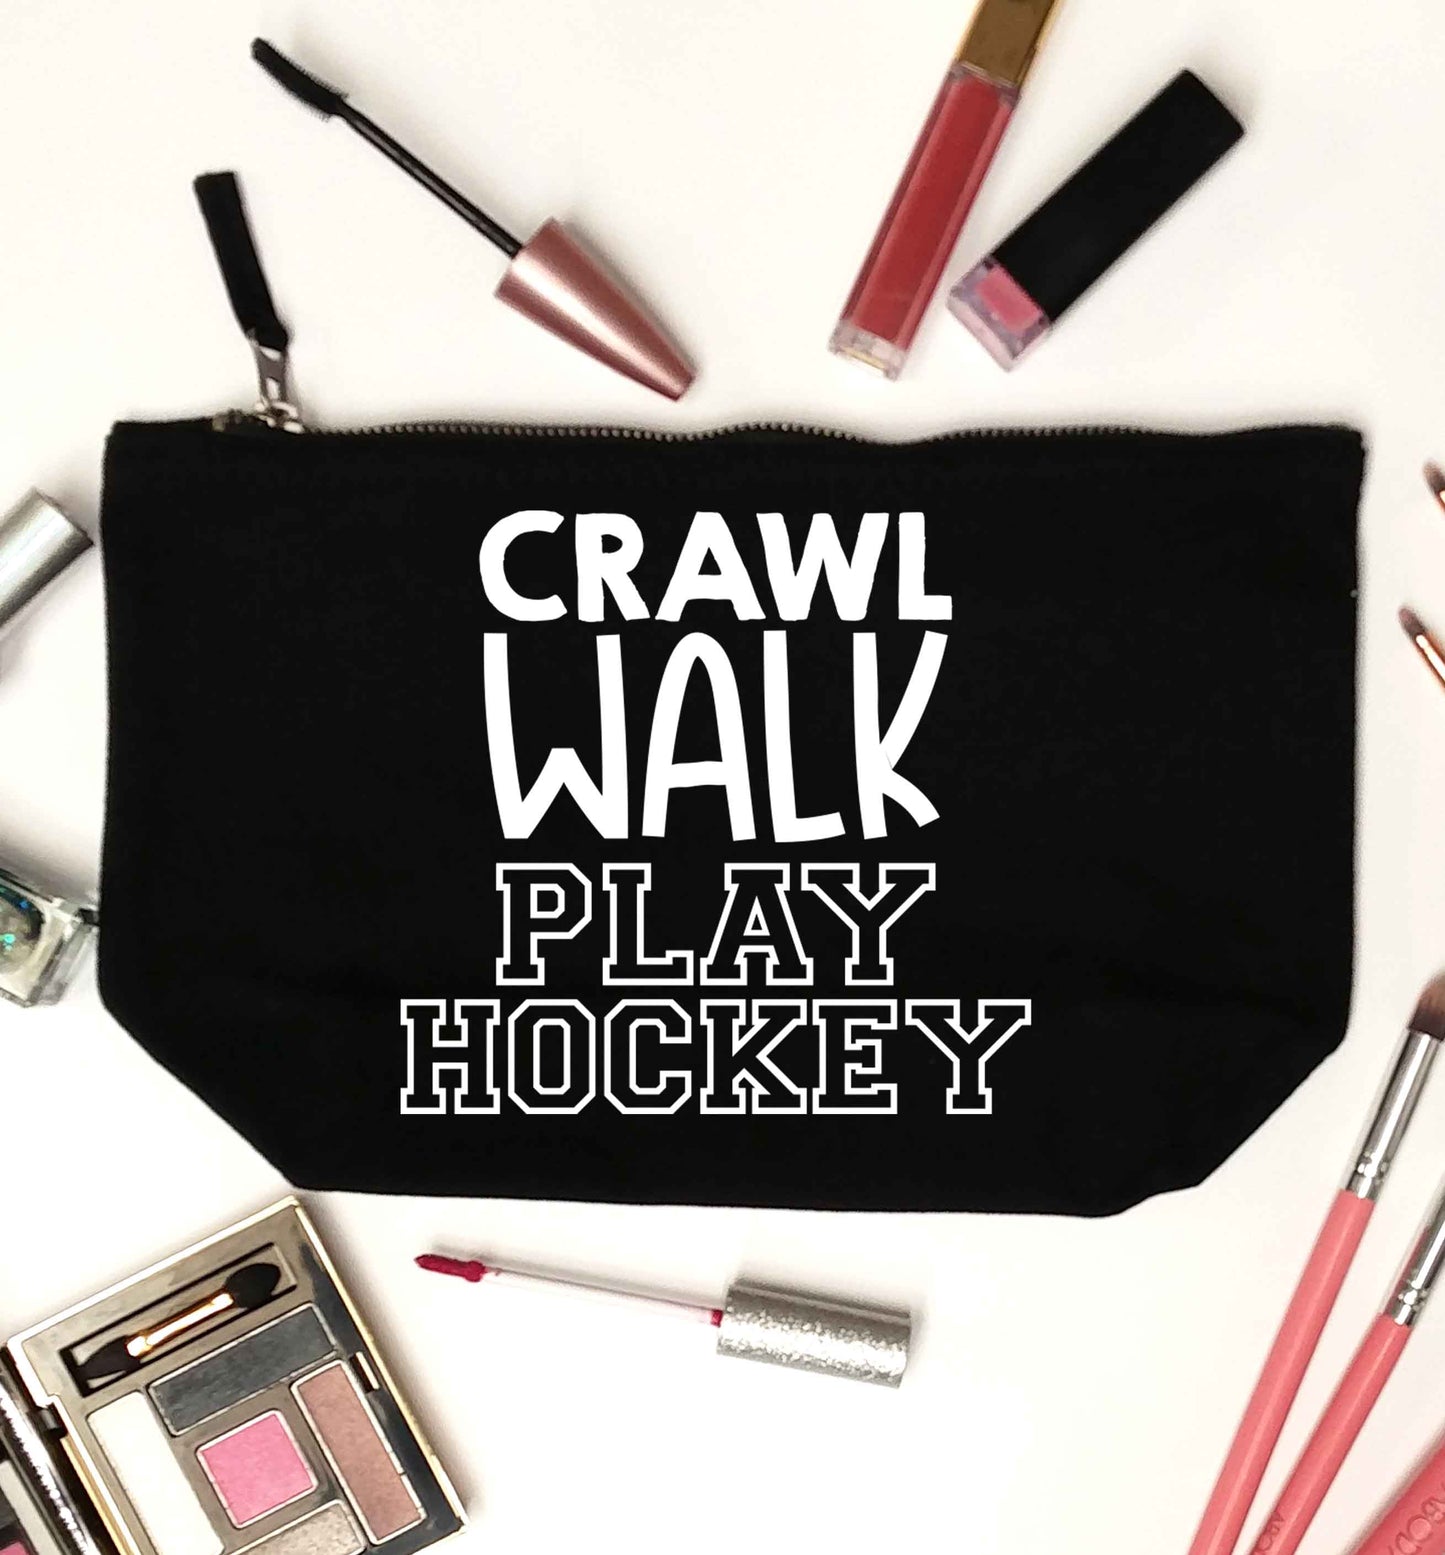 Crawl walk play hockey black makeup bag